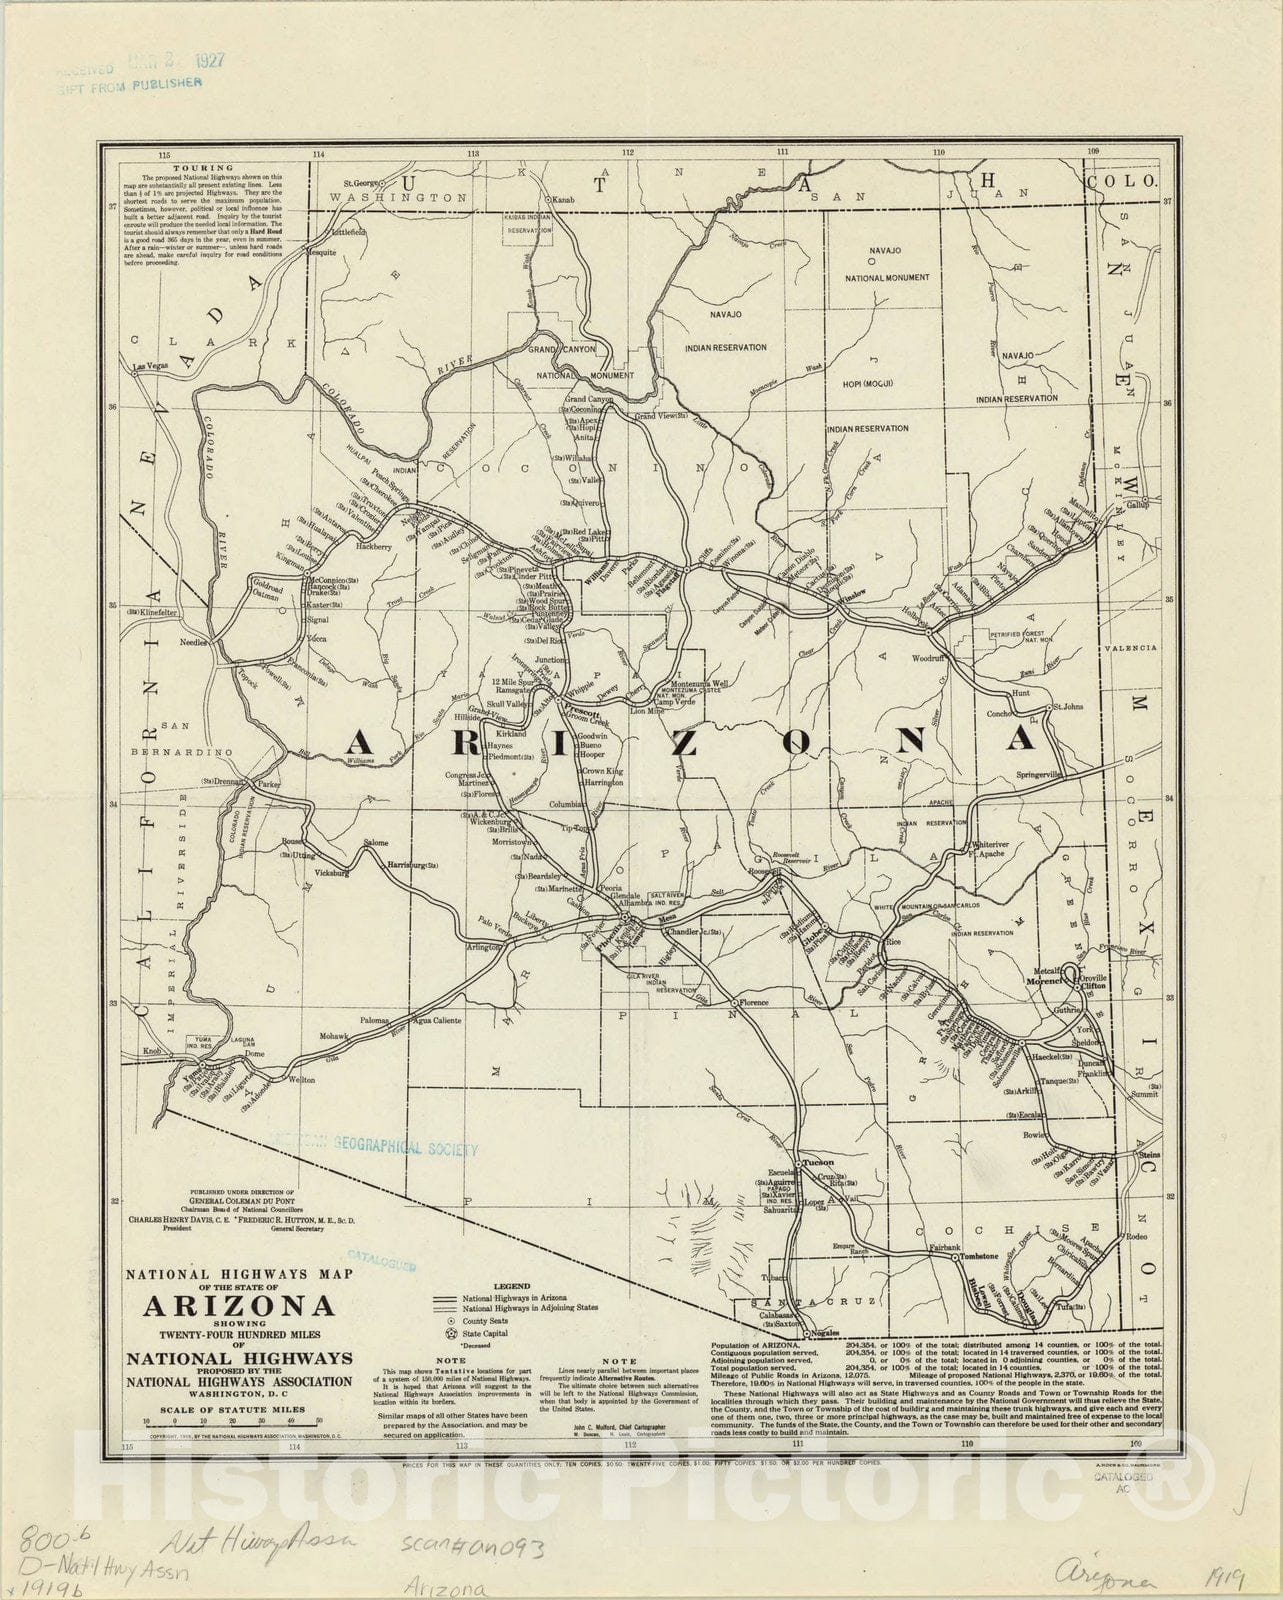 Map : Arizona 1919, National highways map of the state of Arizona showing twenty-four hundred miles of national highways